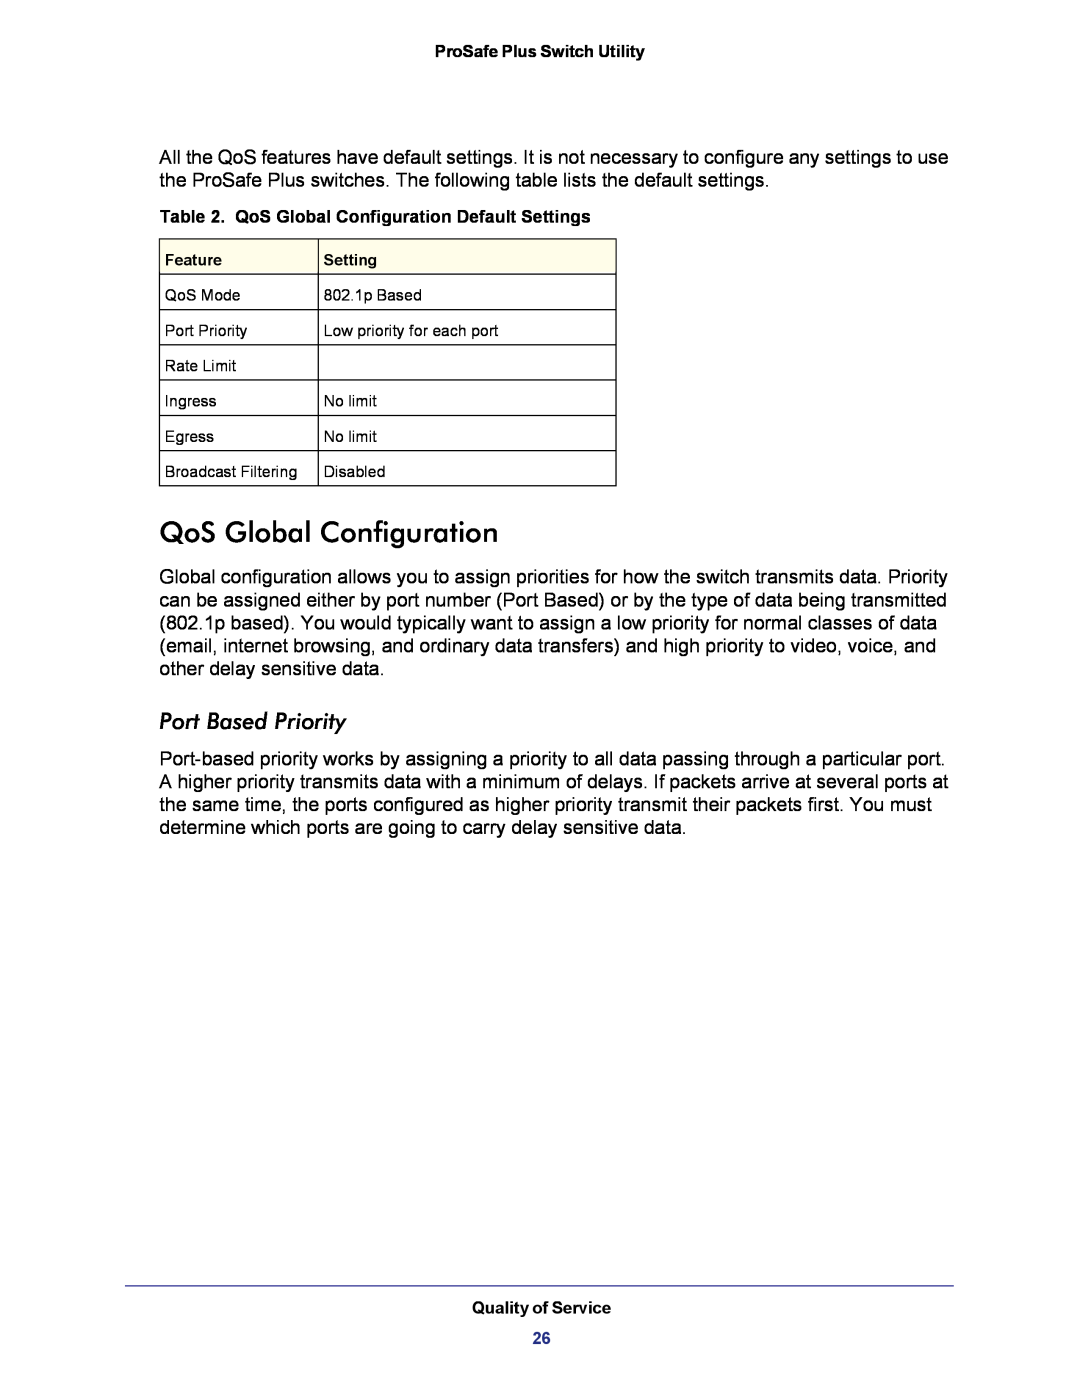 NETGEAR JGS524E-100NAS manual QoS Global Configuration, Port Based Priority 